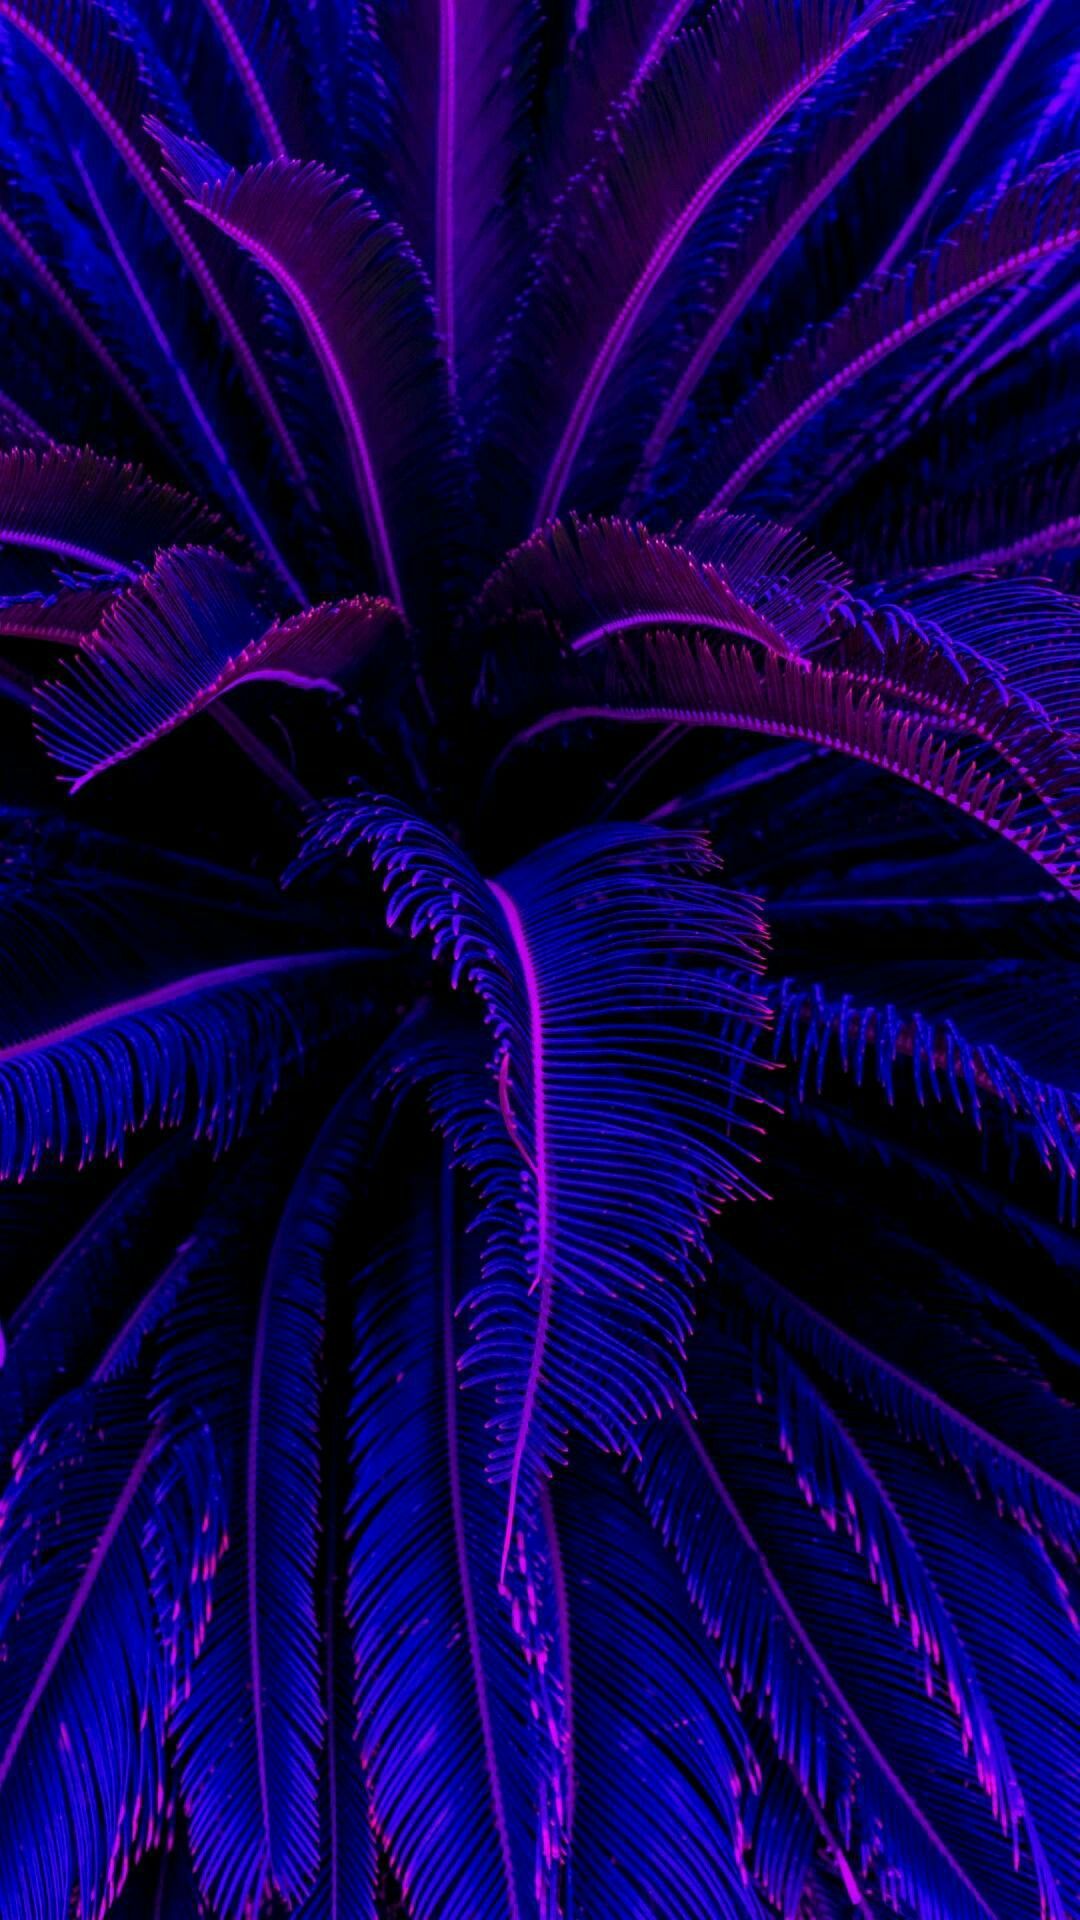 Purple Neon Images  Free Download on Freepik